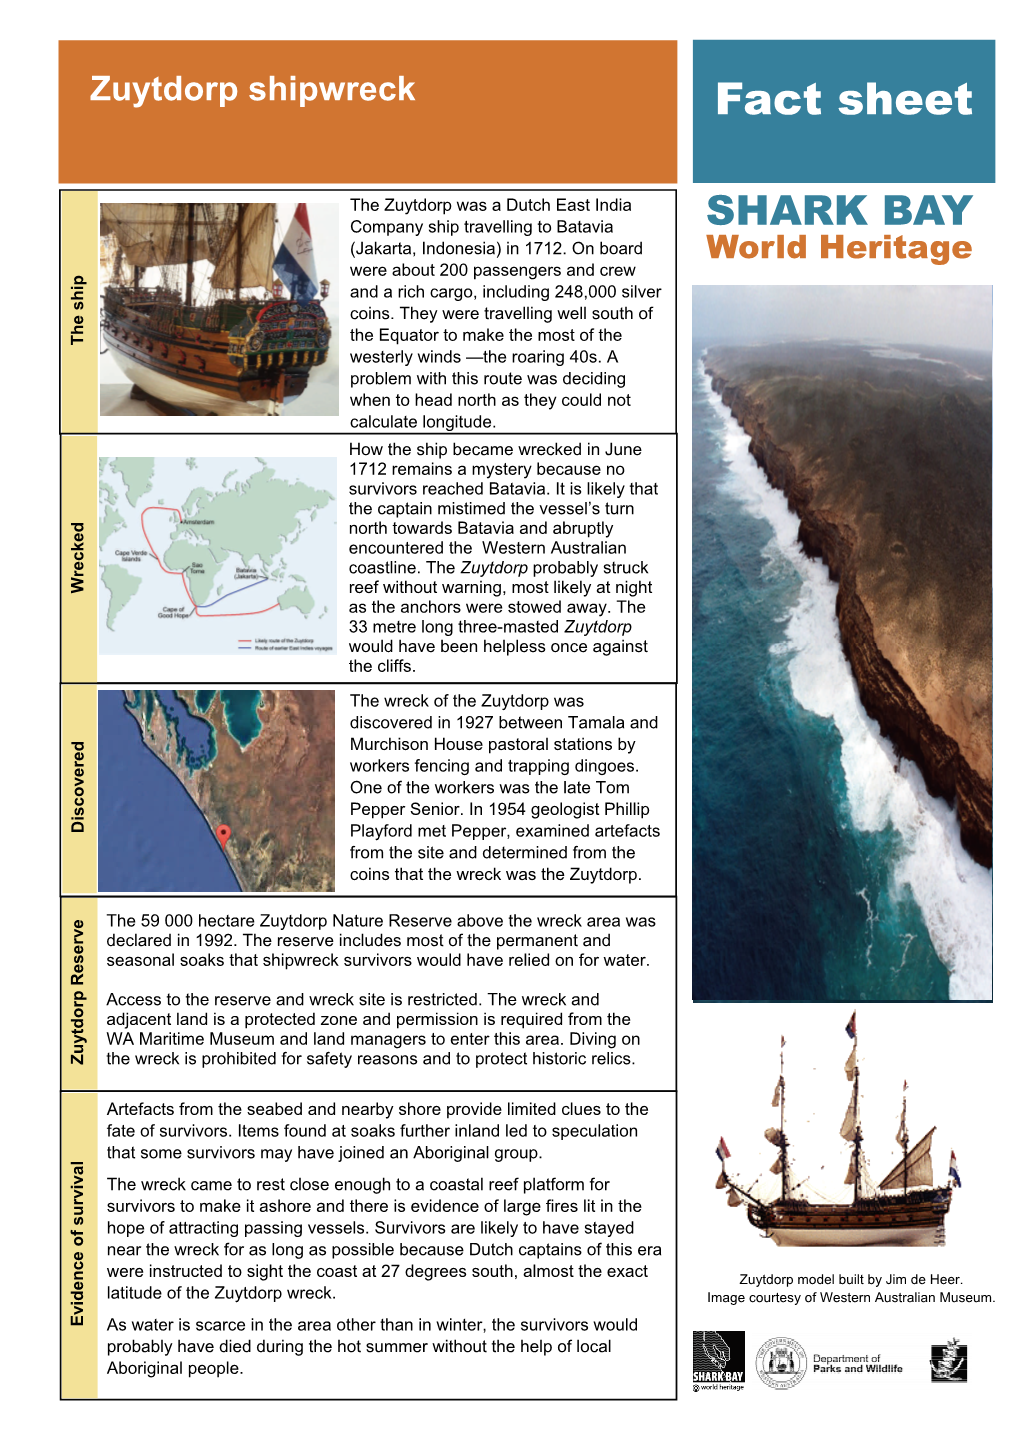 Zuytdorp Shipwreck Fact Sheet